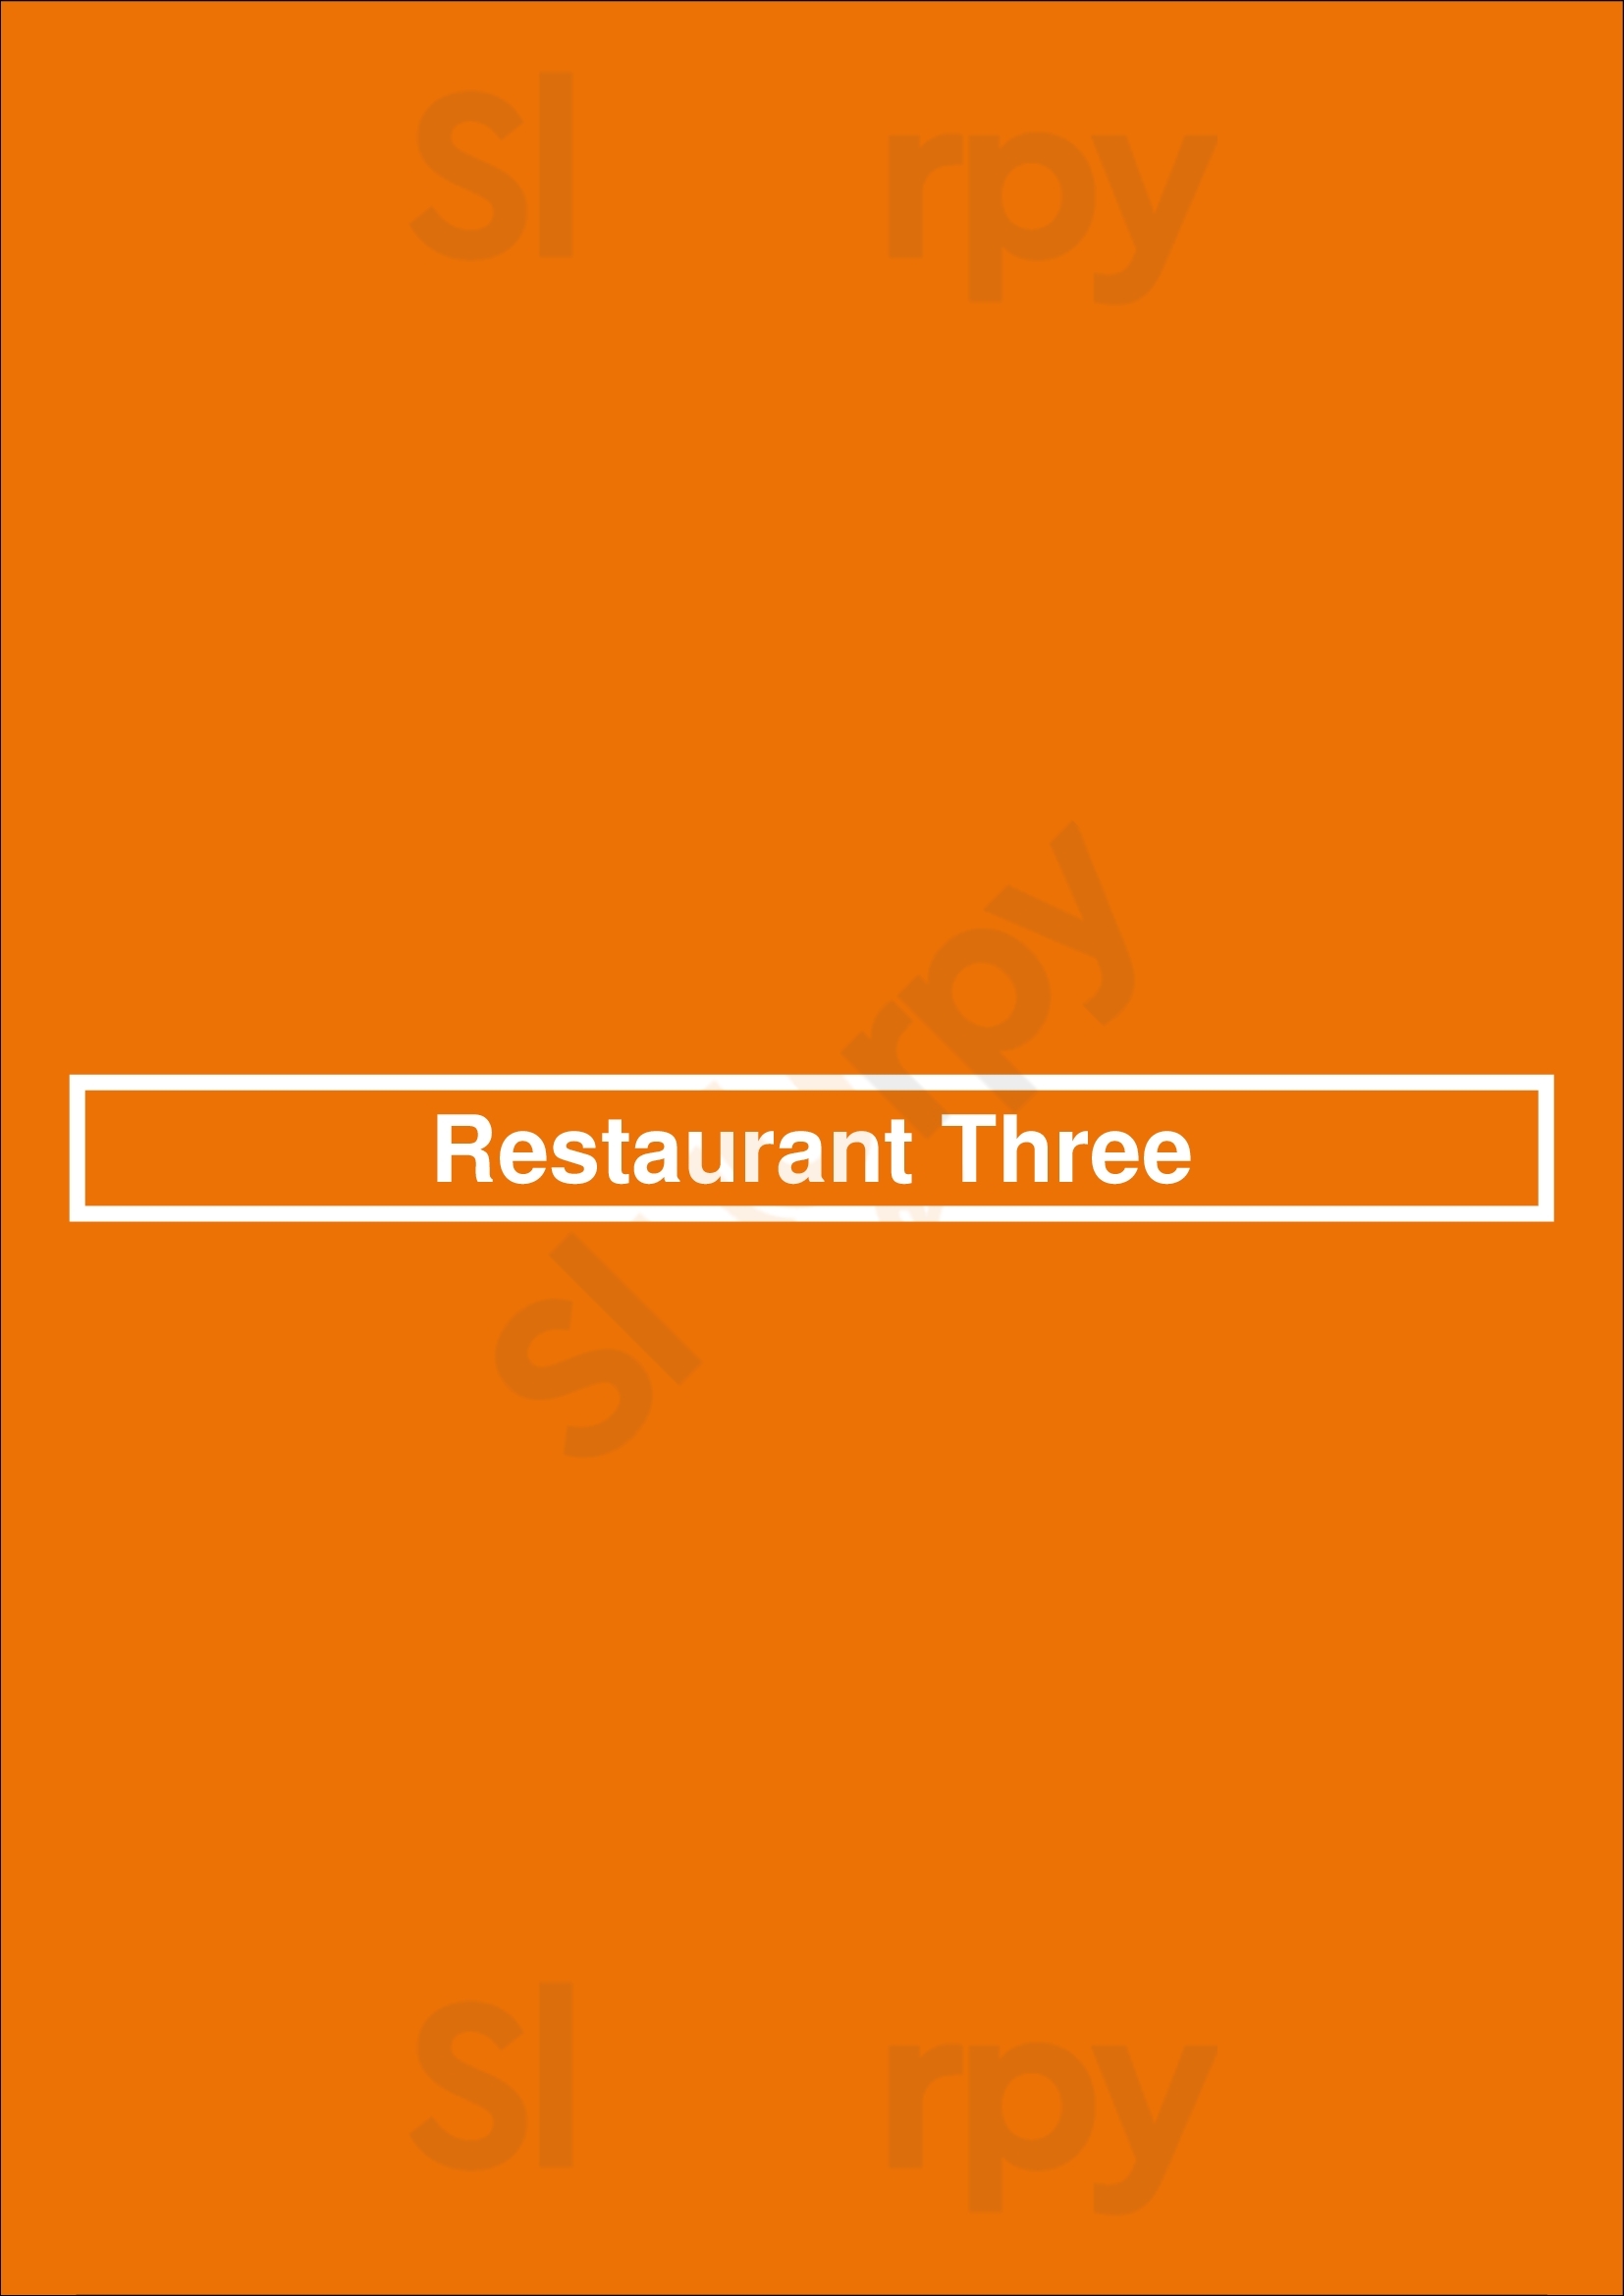 Restaurant Three Rotterdam Menu - 1